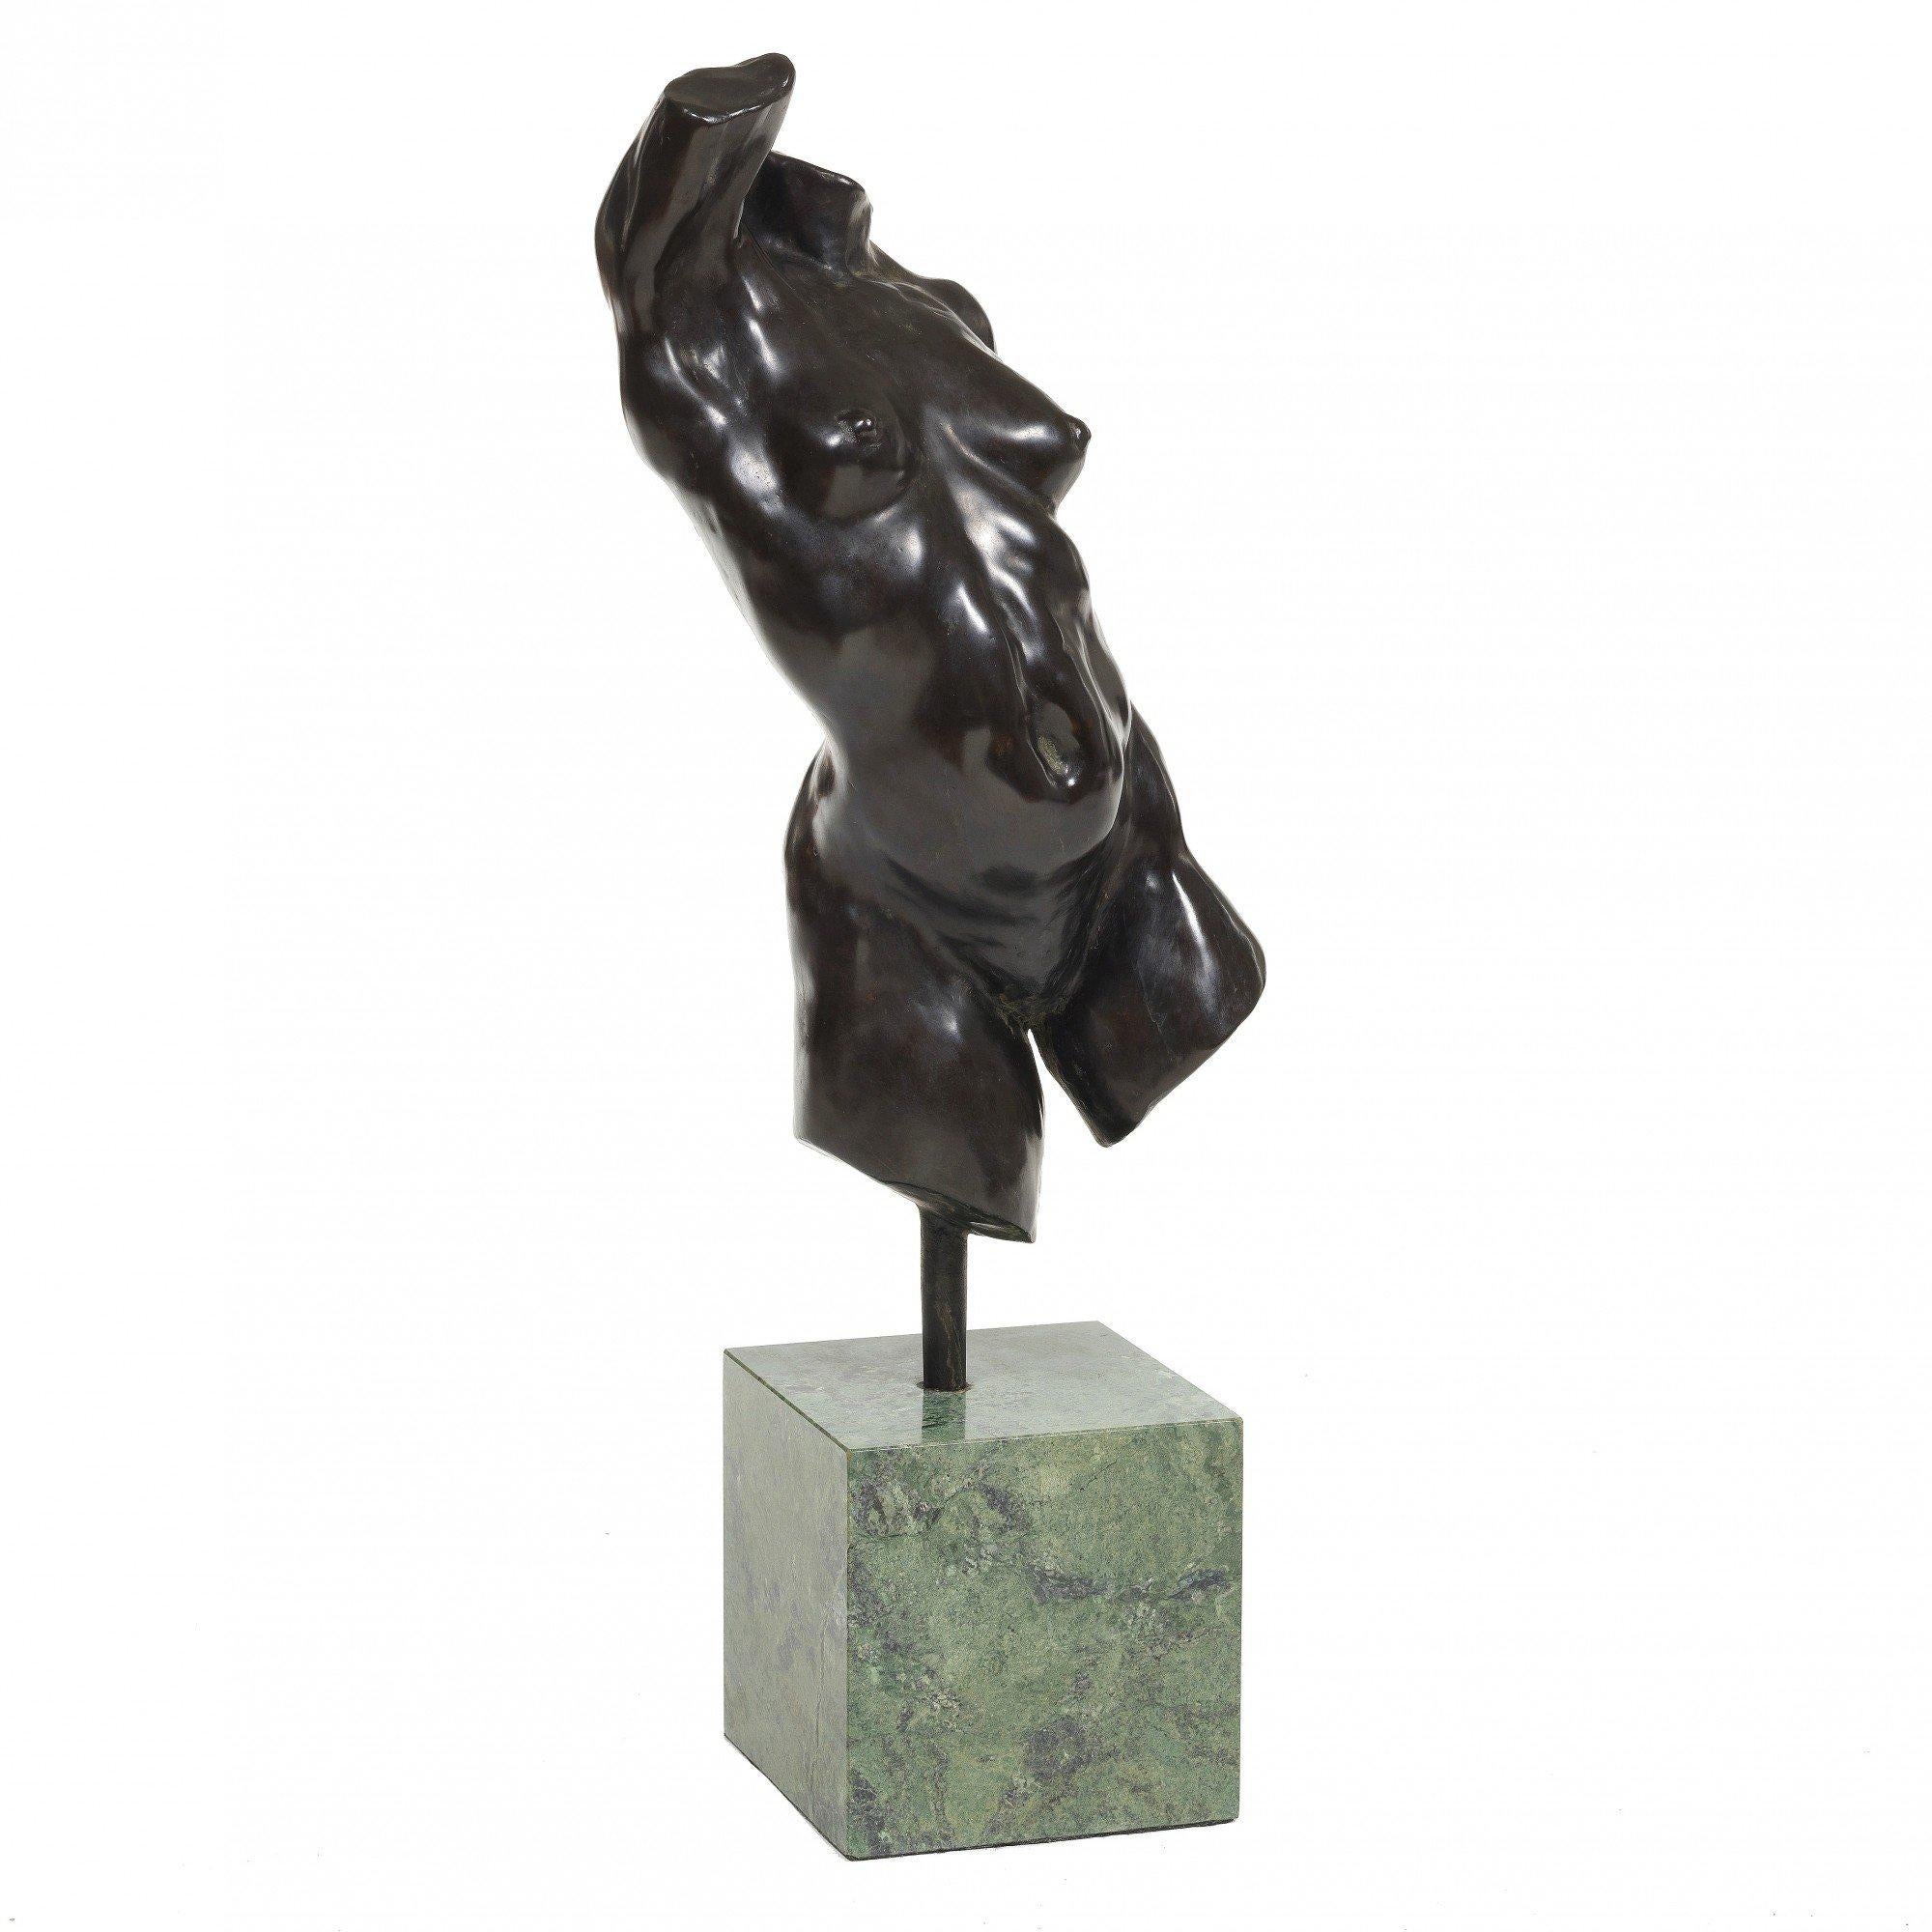 Alan Cottrill Figurative Sculpture - Nude Female Torso Bronze Sculpture, 20th Century Contemporary American Artist